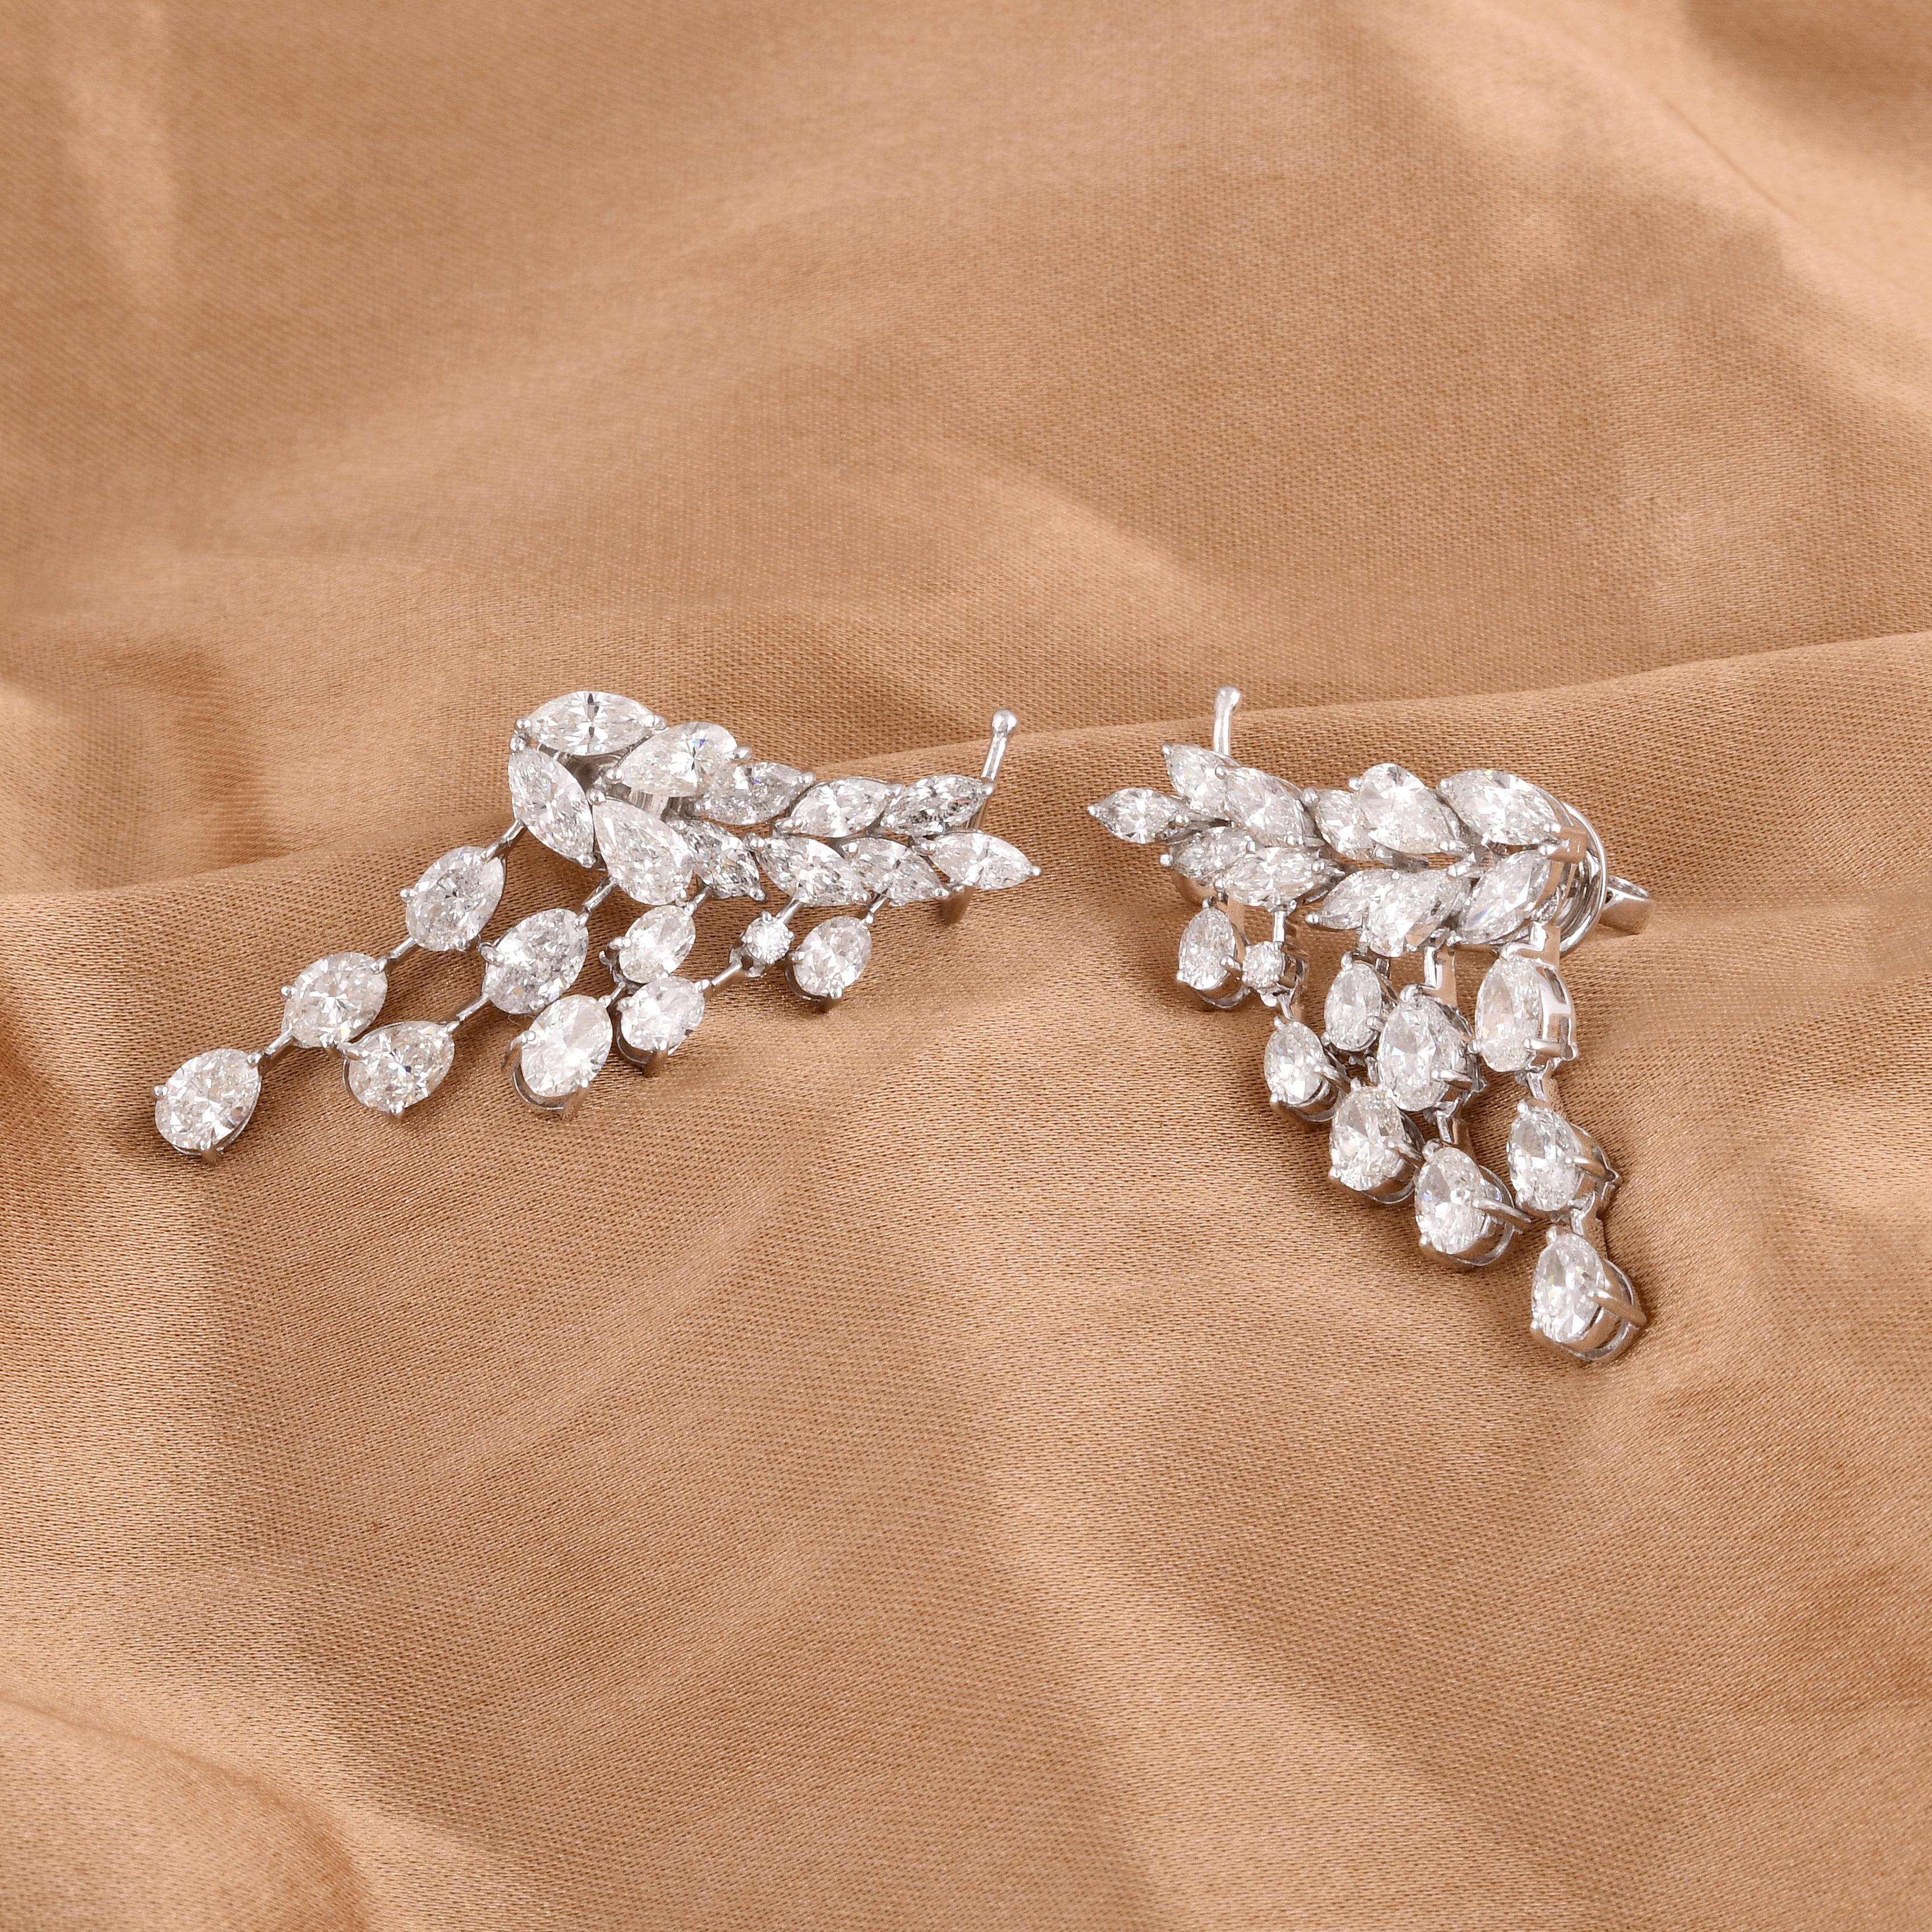 Oval Cut 6.32 Carat Oval Pear & Marquise Diamond Ear Cuff Earrings 14 Karat White Gold For Sale